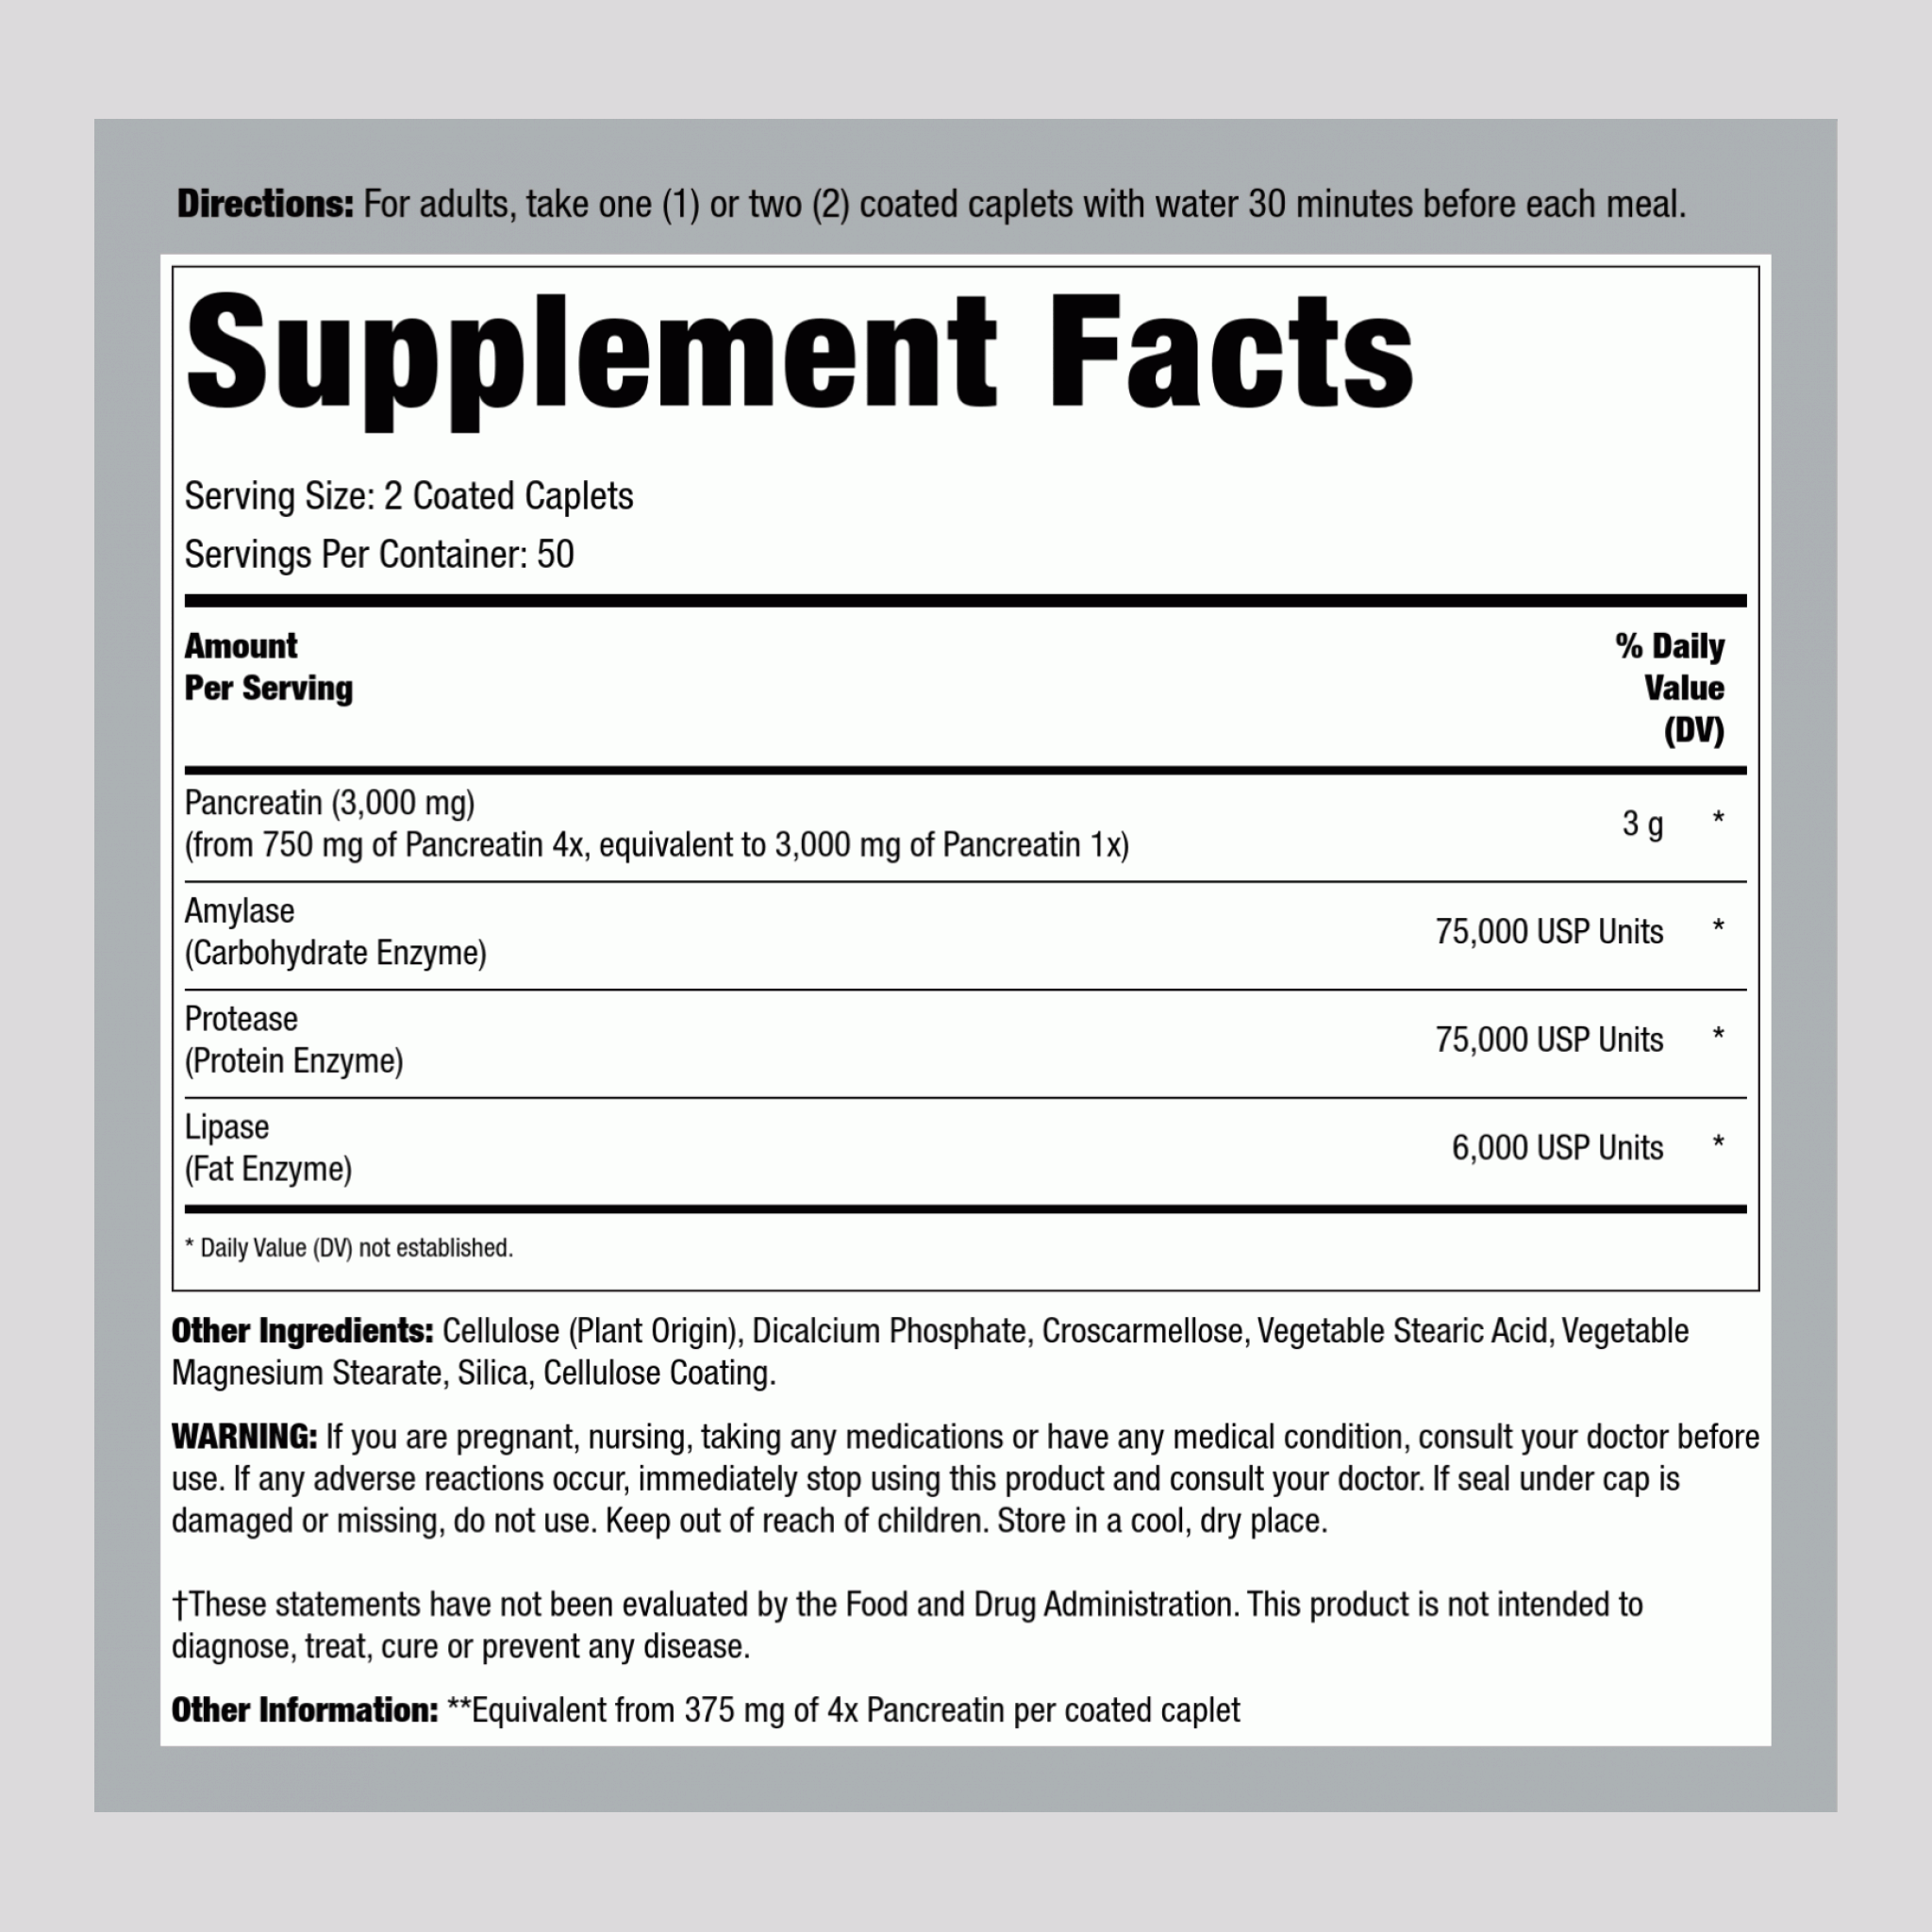 Pancreatin, 1500 mg, 100 Coated Caplets